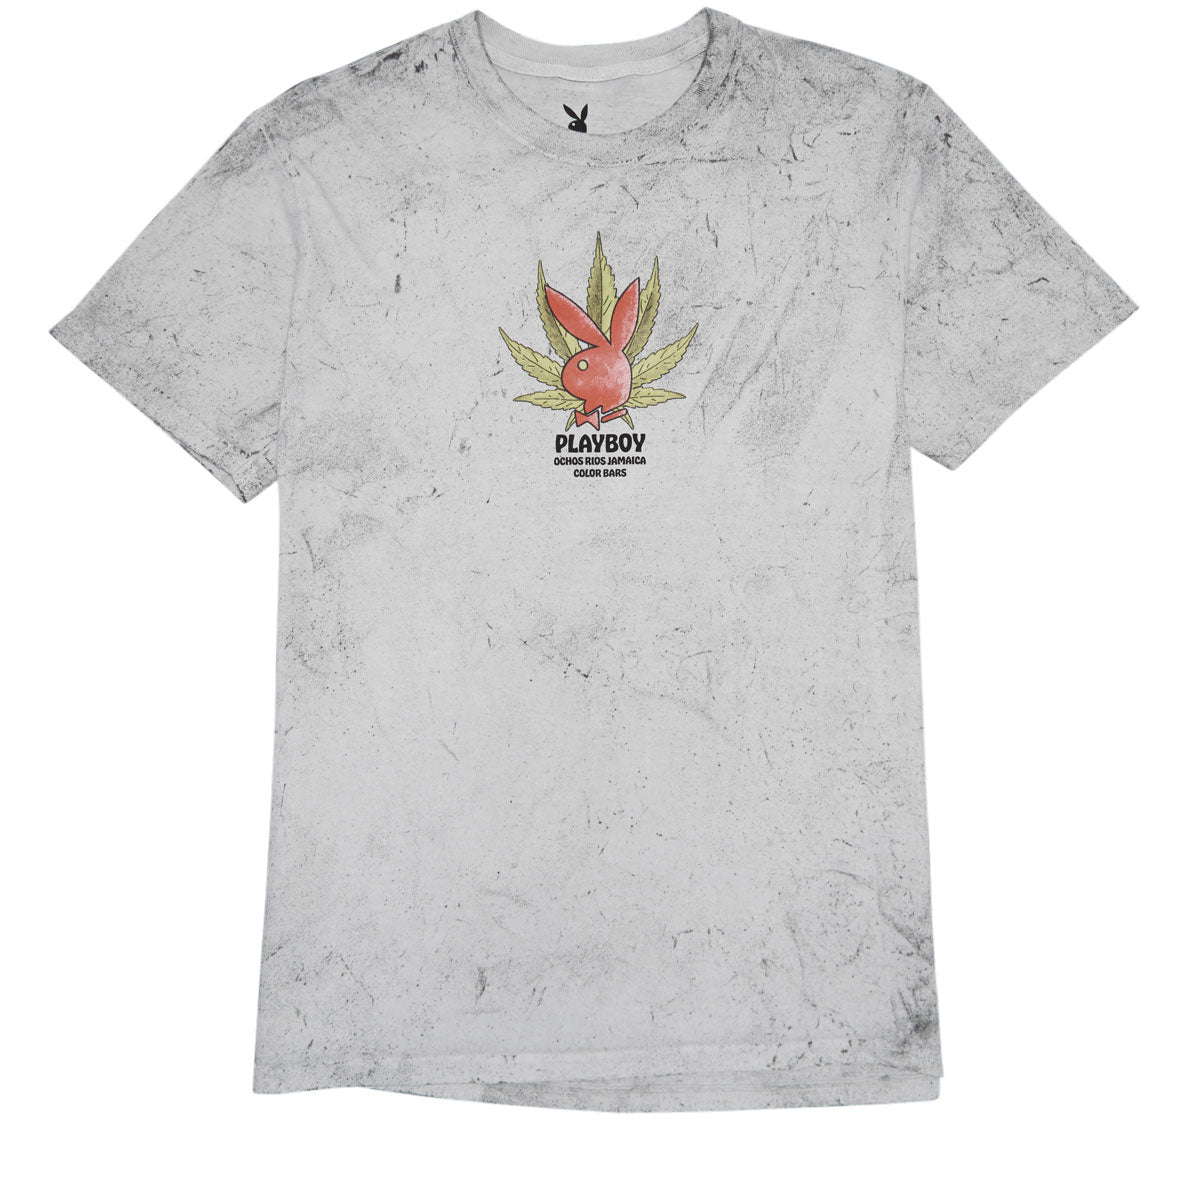 Color Bars x Playboy Jamaica Spades T-Shirt - Smoke image 2